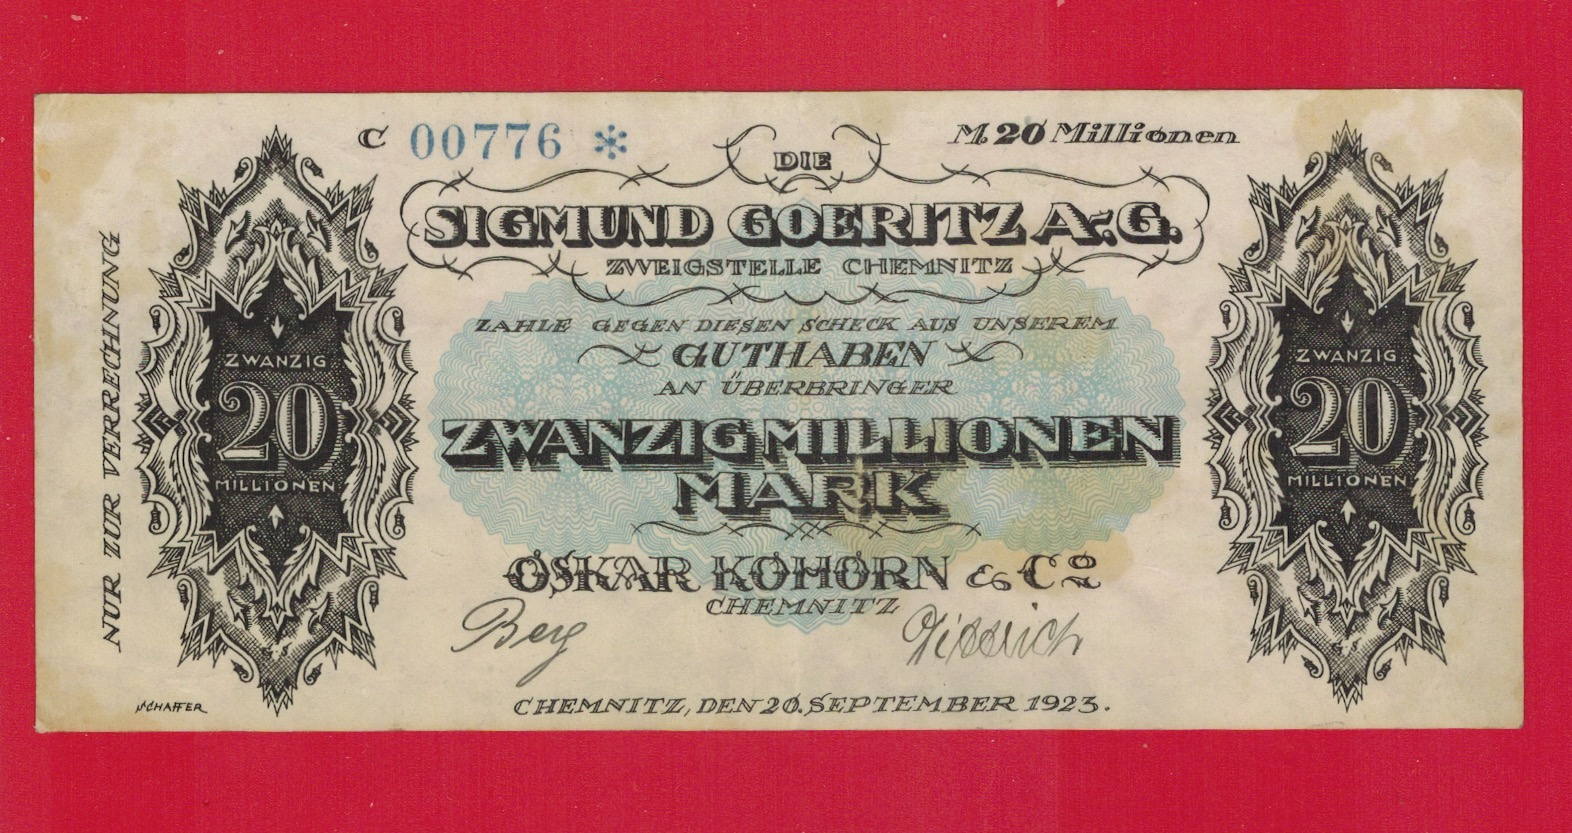  Notgeld Chemnitz 20 Mark 1923 - Fa. Oskar Kohorn - gebraucht   